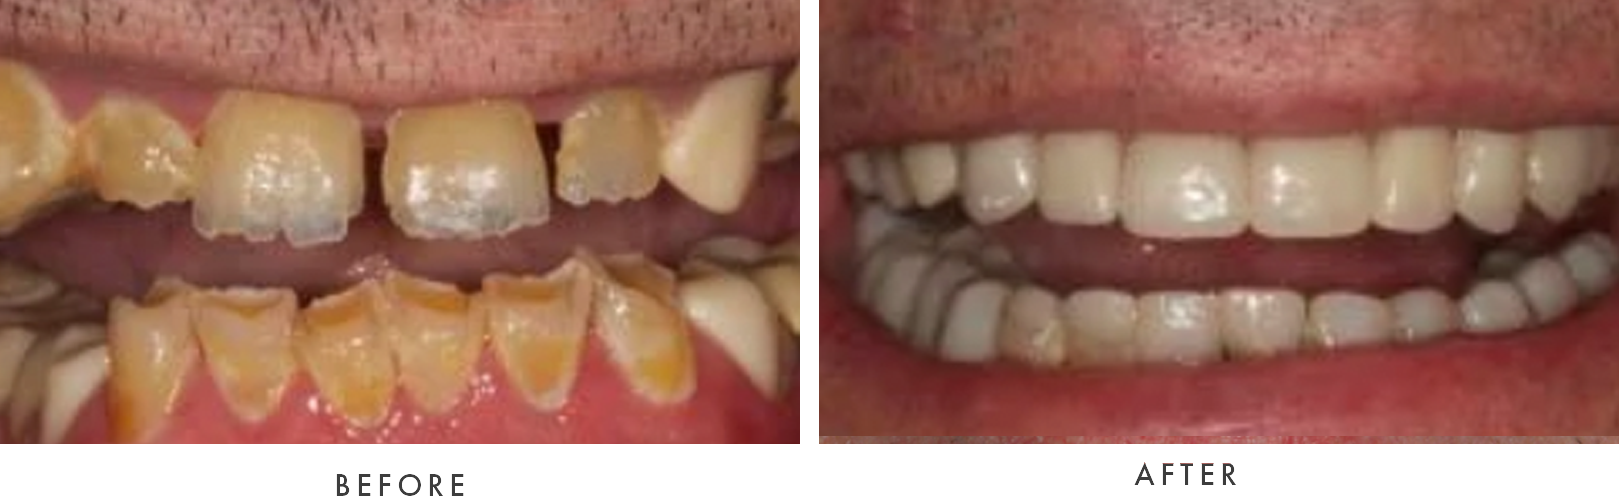 removable dentures combined case 2 drscruggs